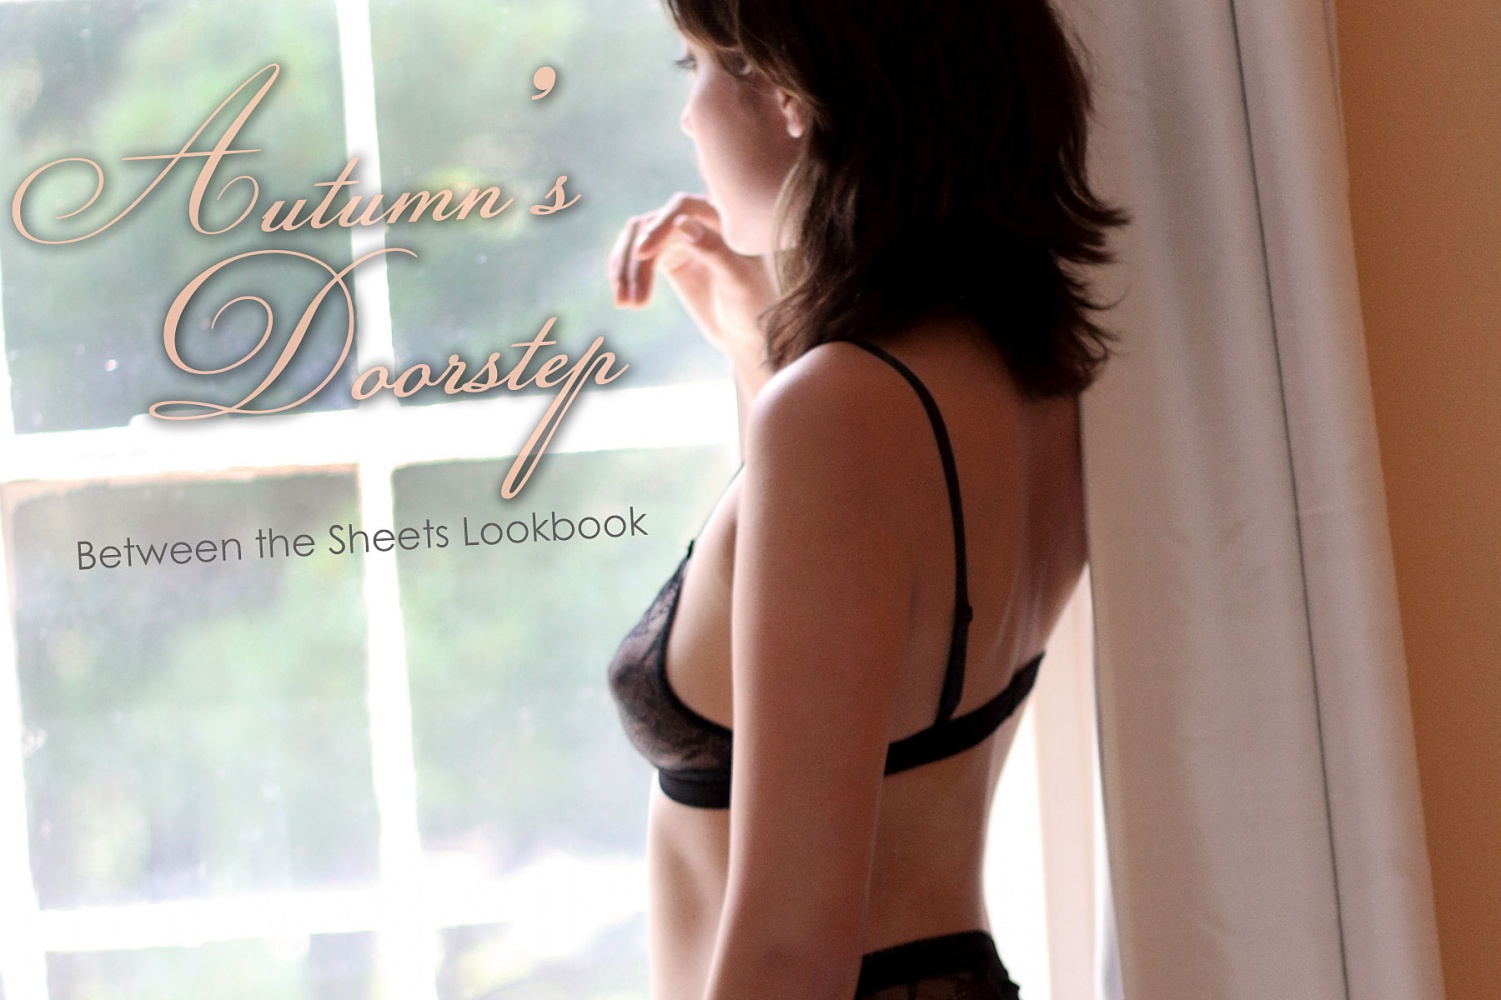 Early Fall 2014 lingerie lookbook - Autumn's Doorstep